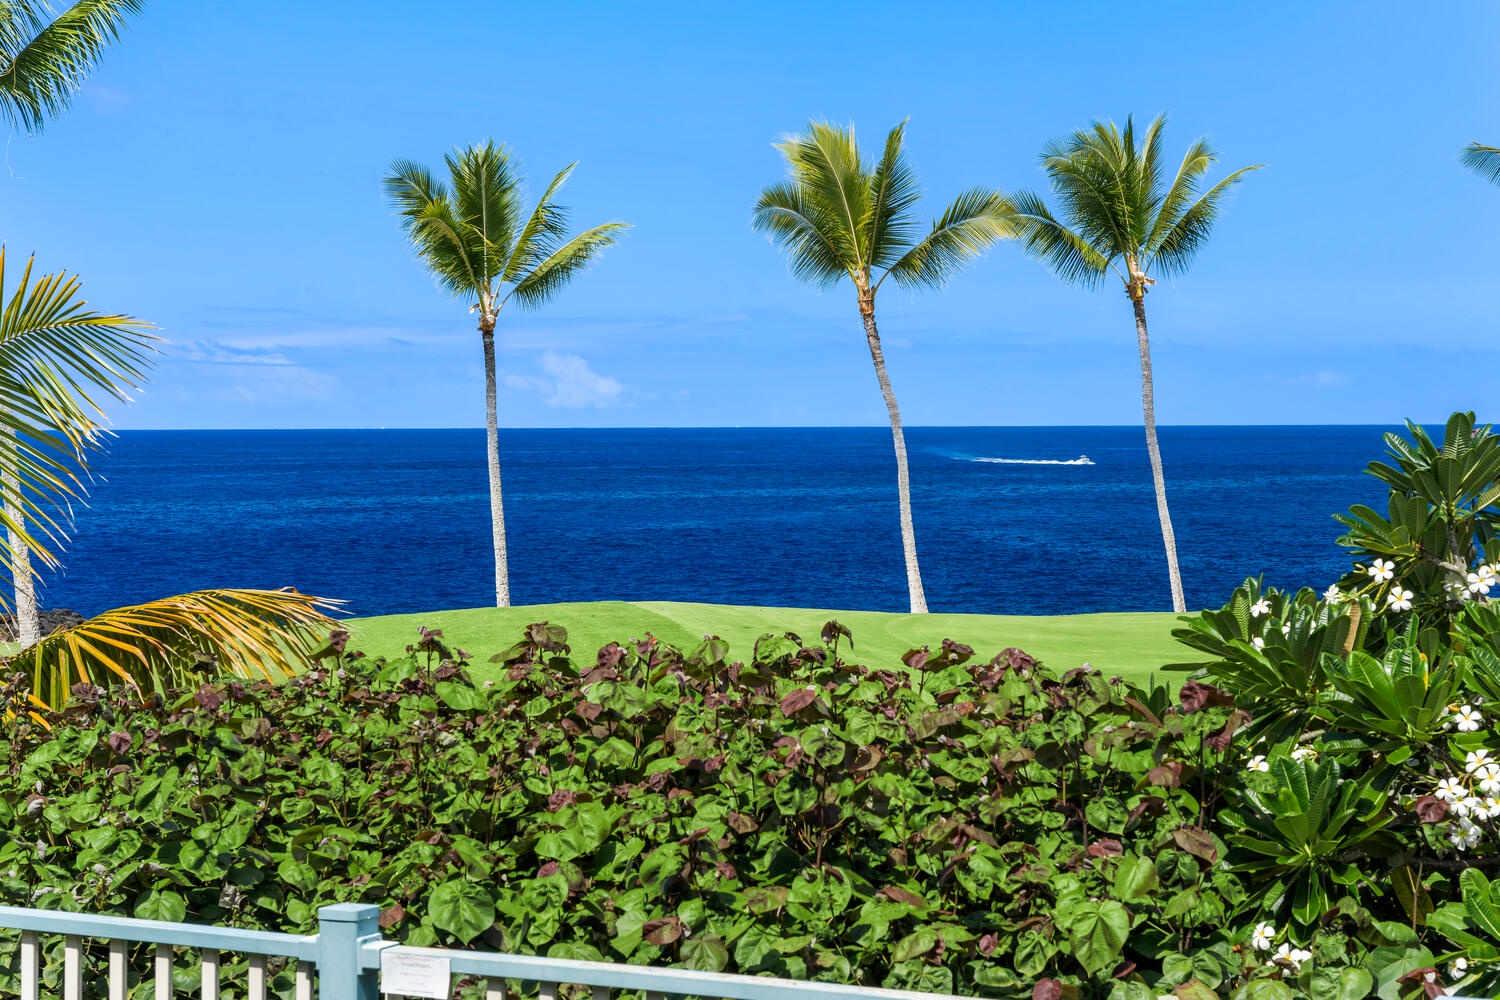 Kailua-Kona Vacation Rentals, Holua Kai #26 - Idyllic coastal view featuring tall palm trees against a clear blue ocean, perfect for peaceful moments.